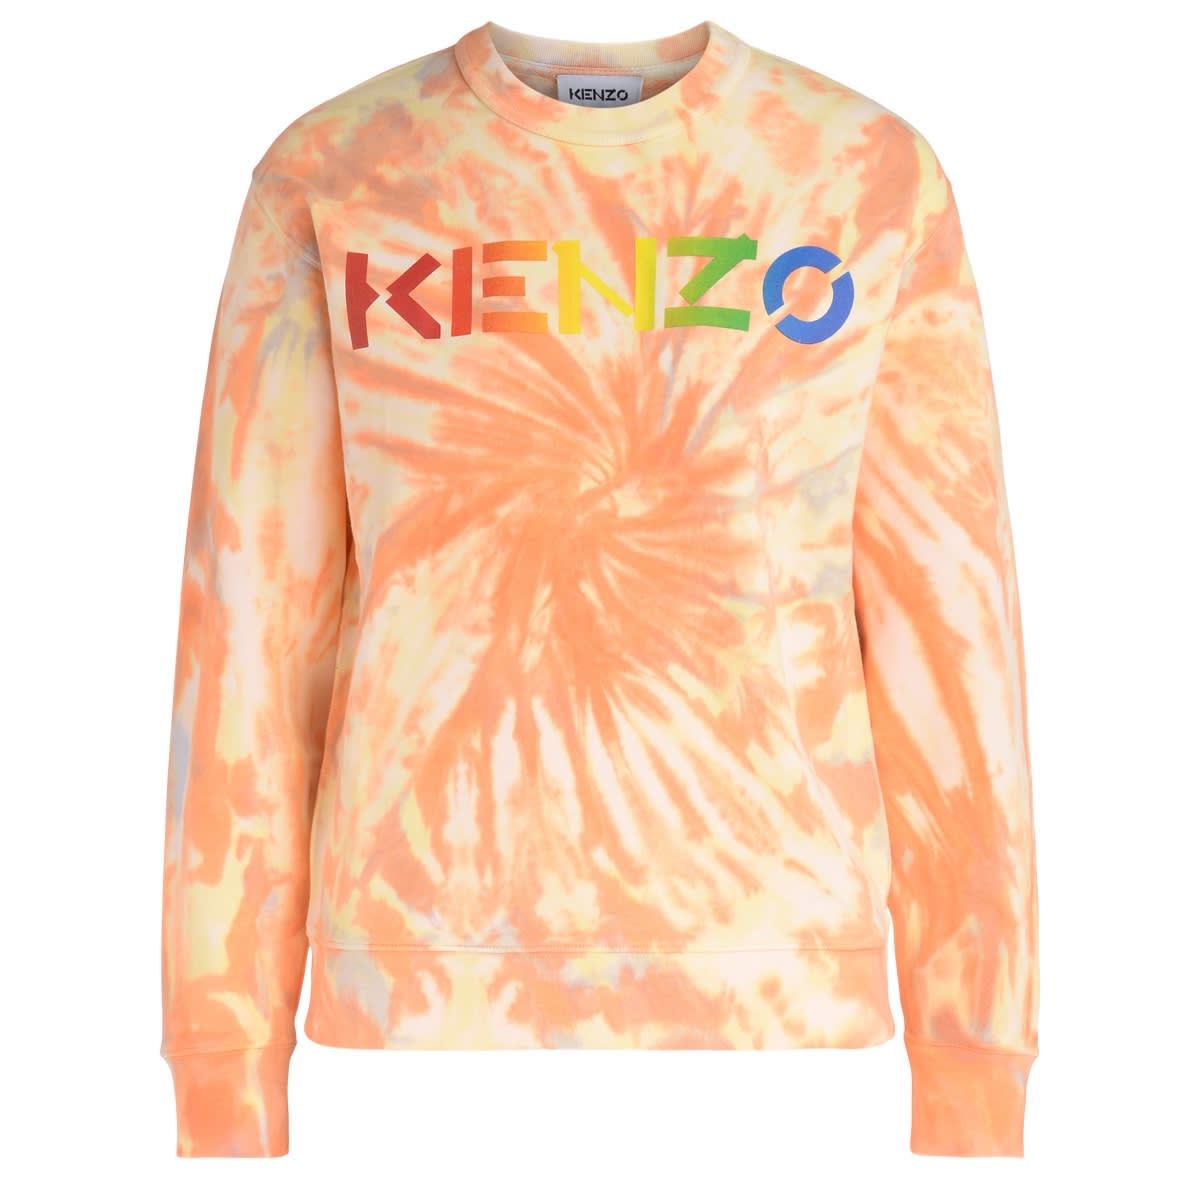 Kenzo Logo Tie-dye Orange Womens Sweatshirt